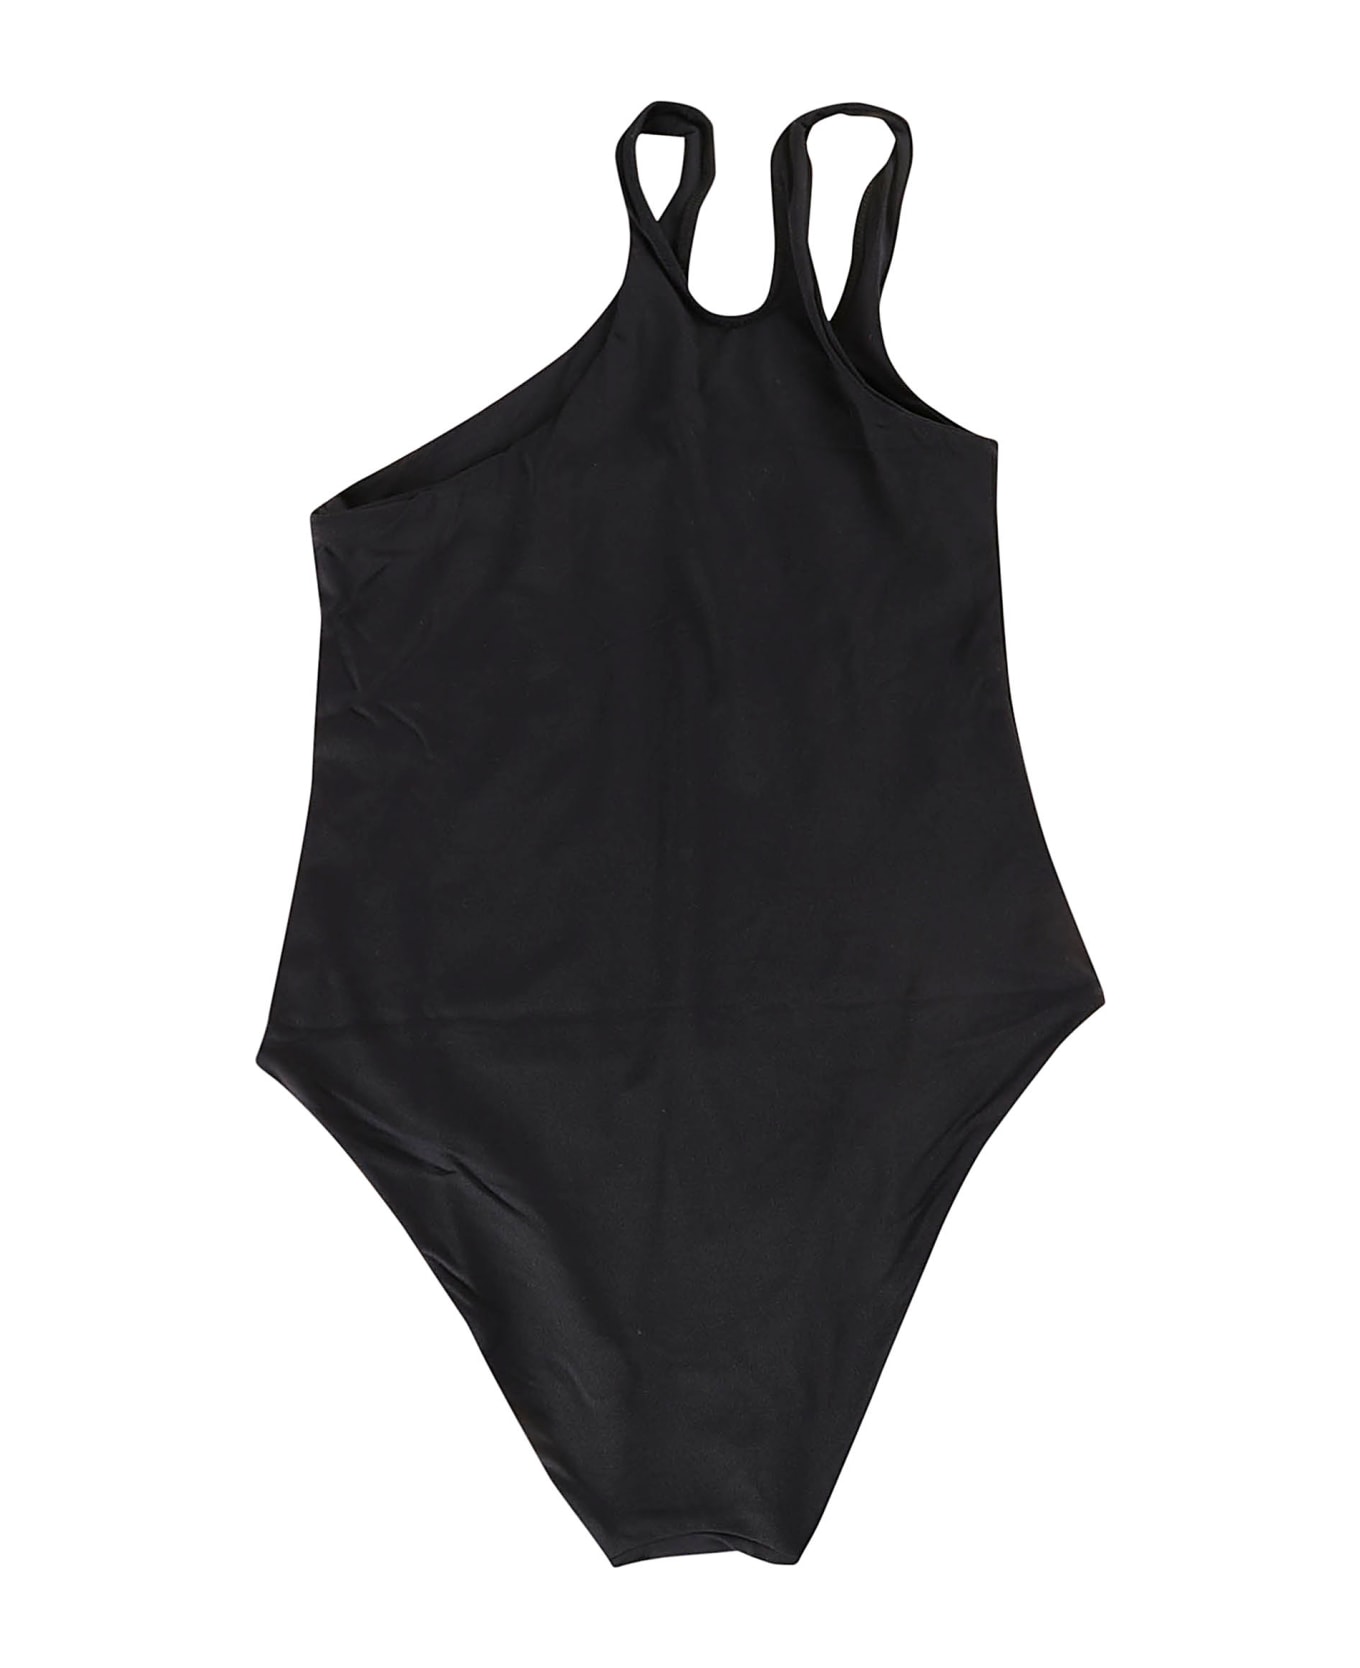 Federica Tosi Slim Fit Plain Swimsuit - Black ワンピース